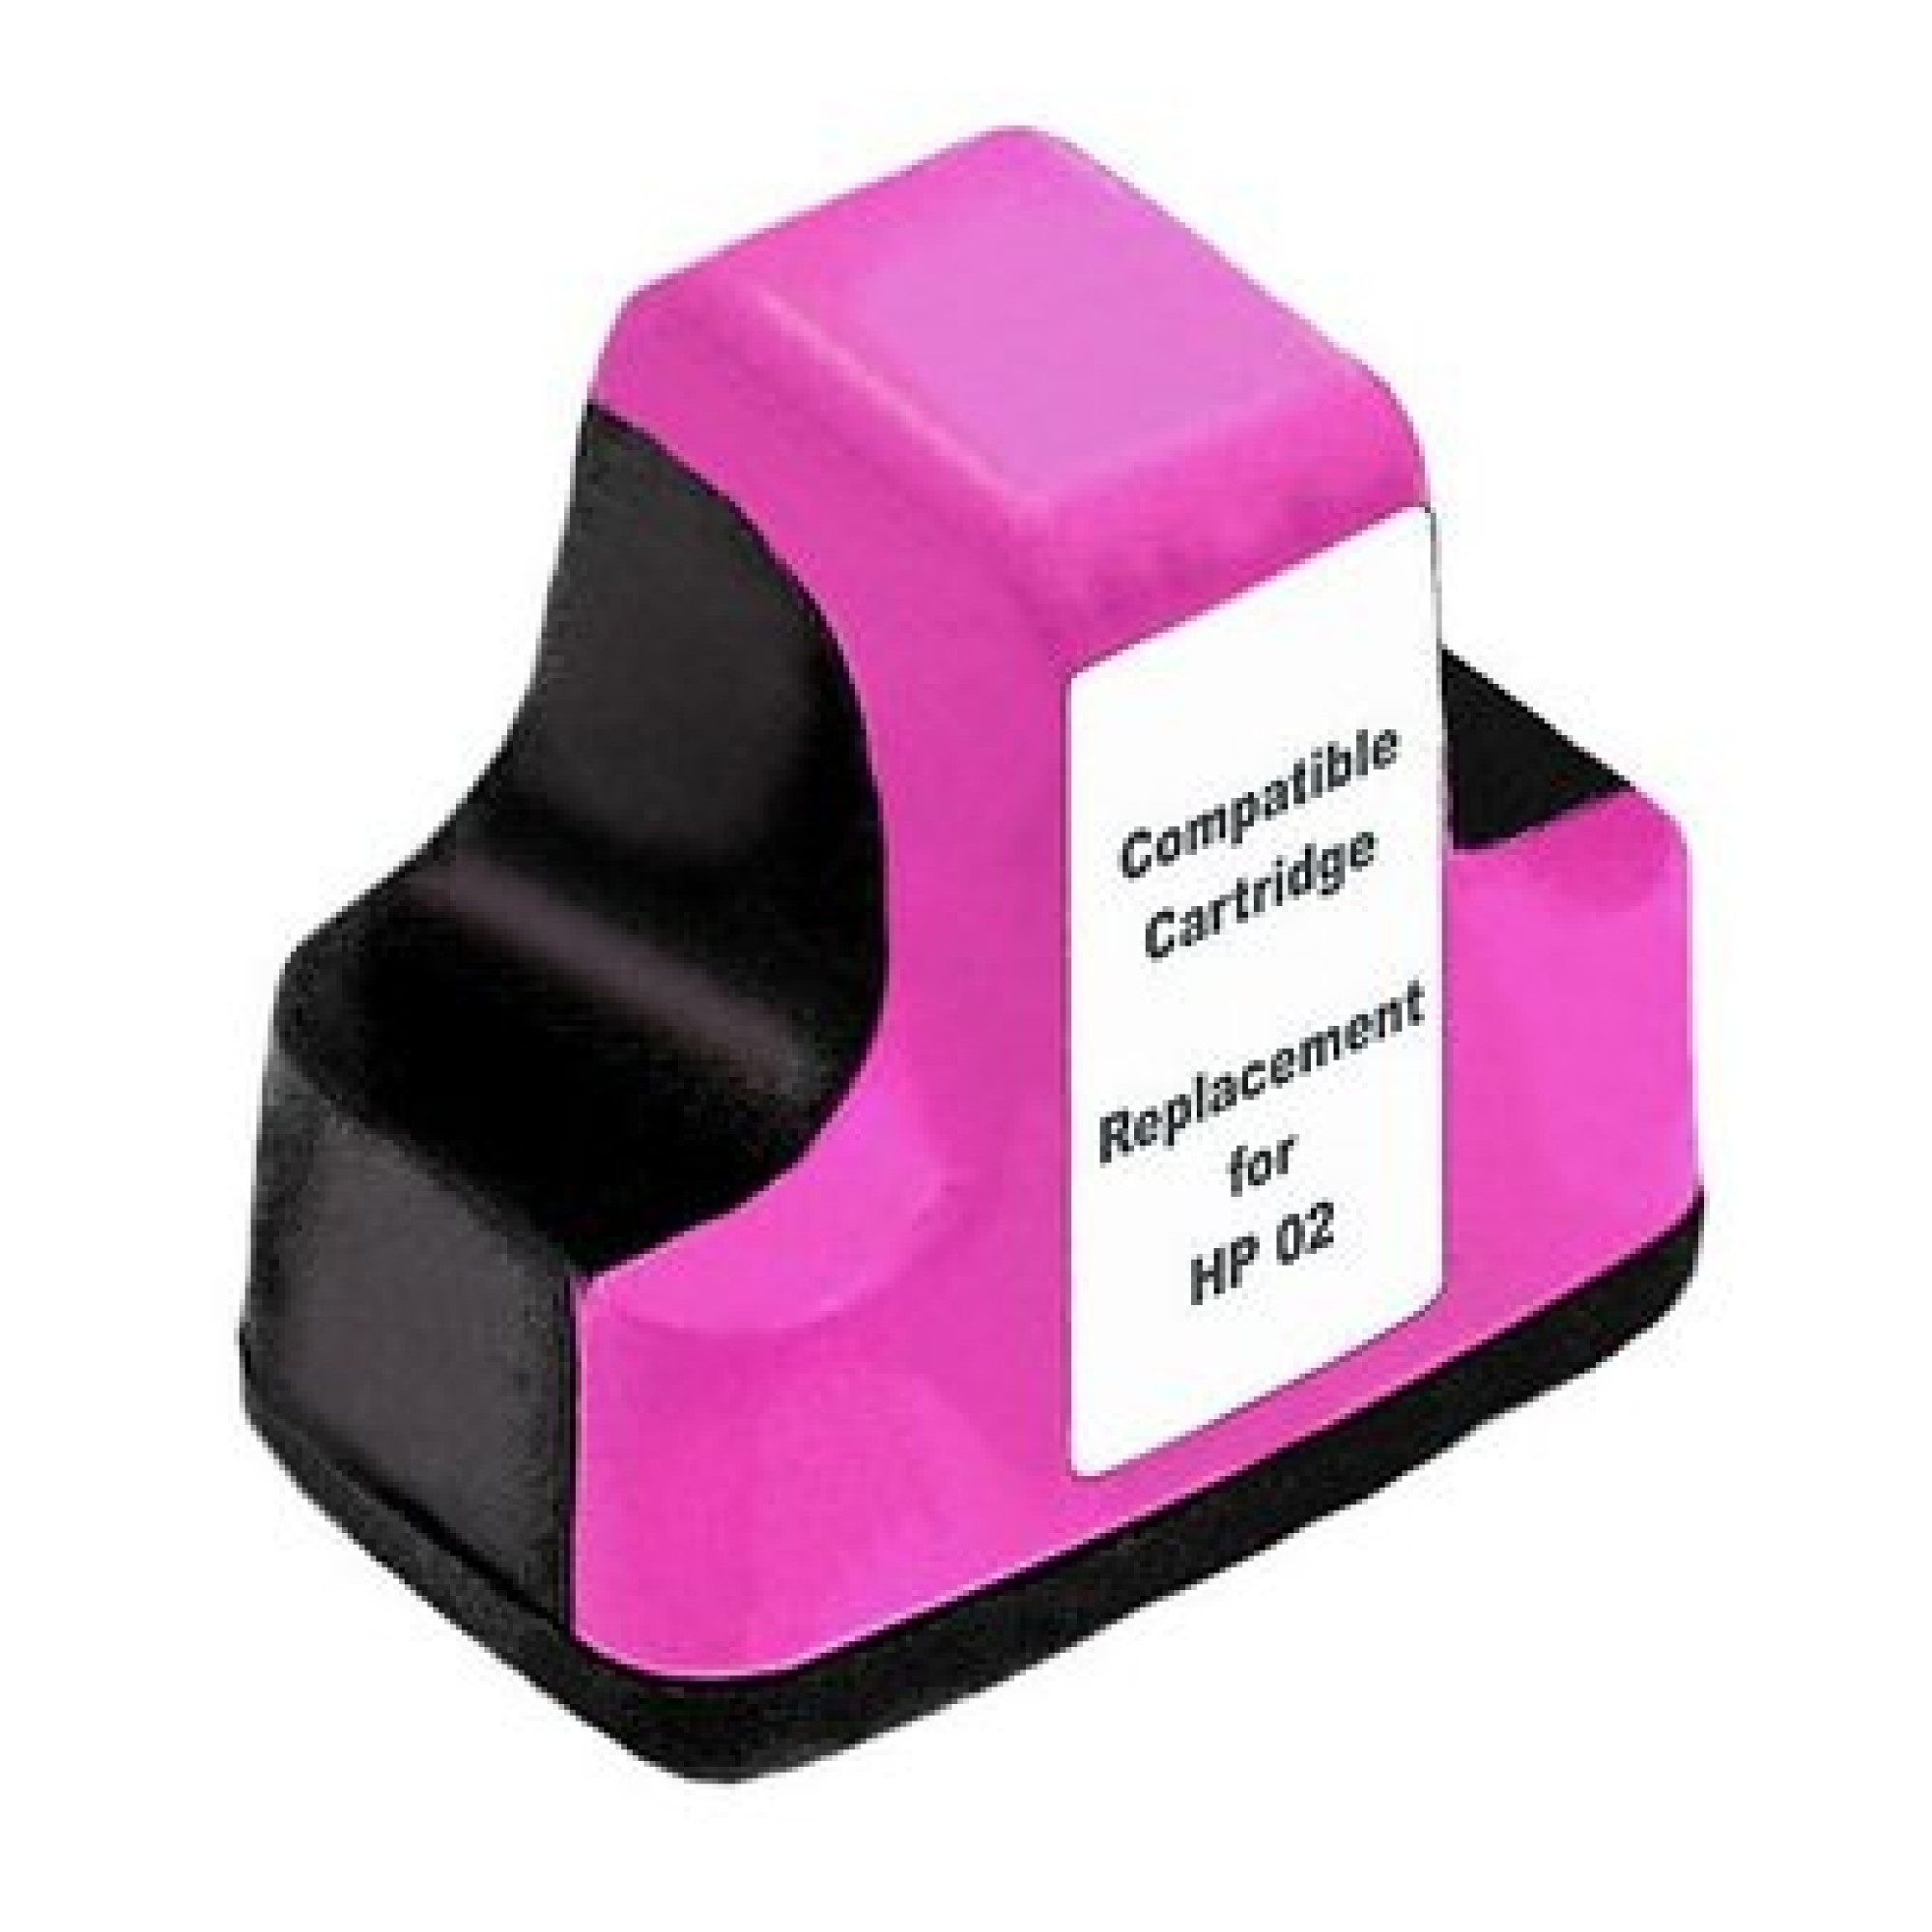 HP 02 / HP02 / HP02xl Compatible Ink Cartridge Magenta